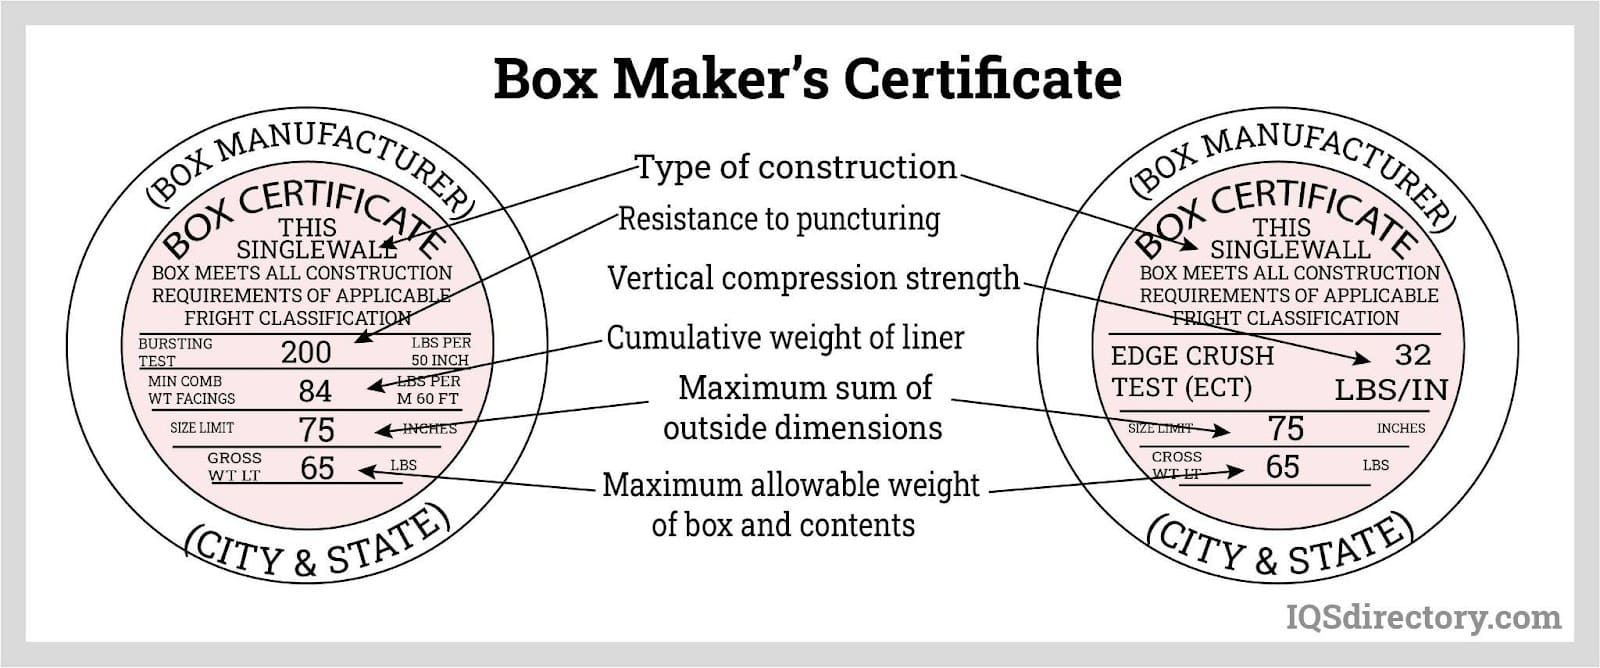 Box Maker‘s Certificate